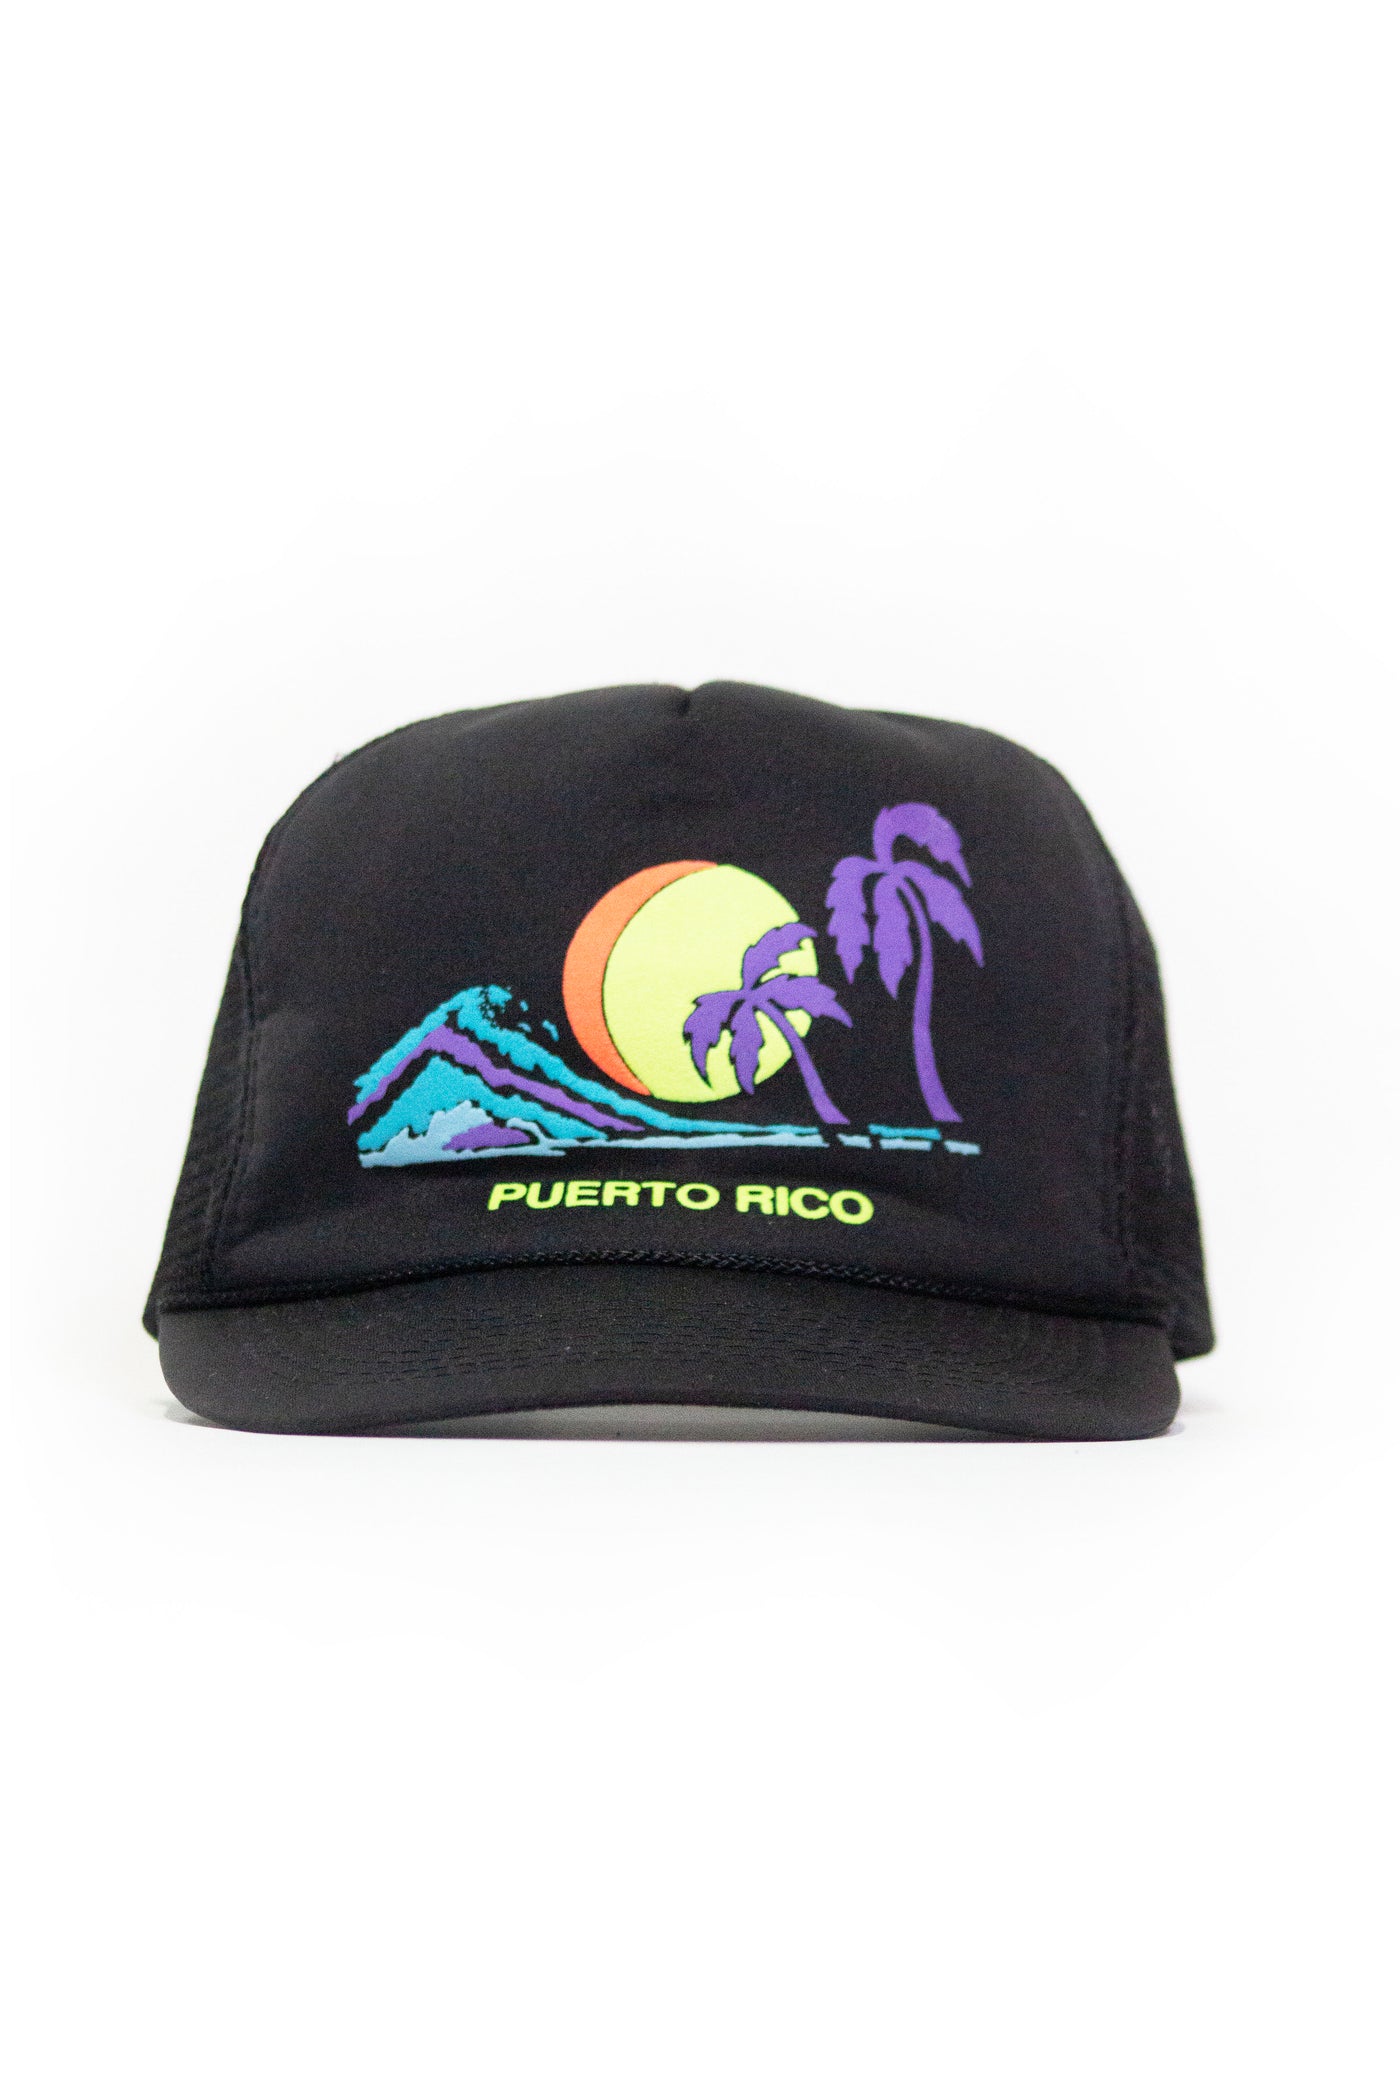 Vintage 80s Puerto Rico Trucker Hat